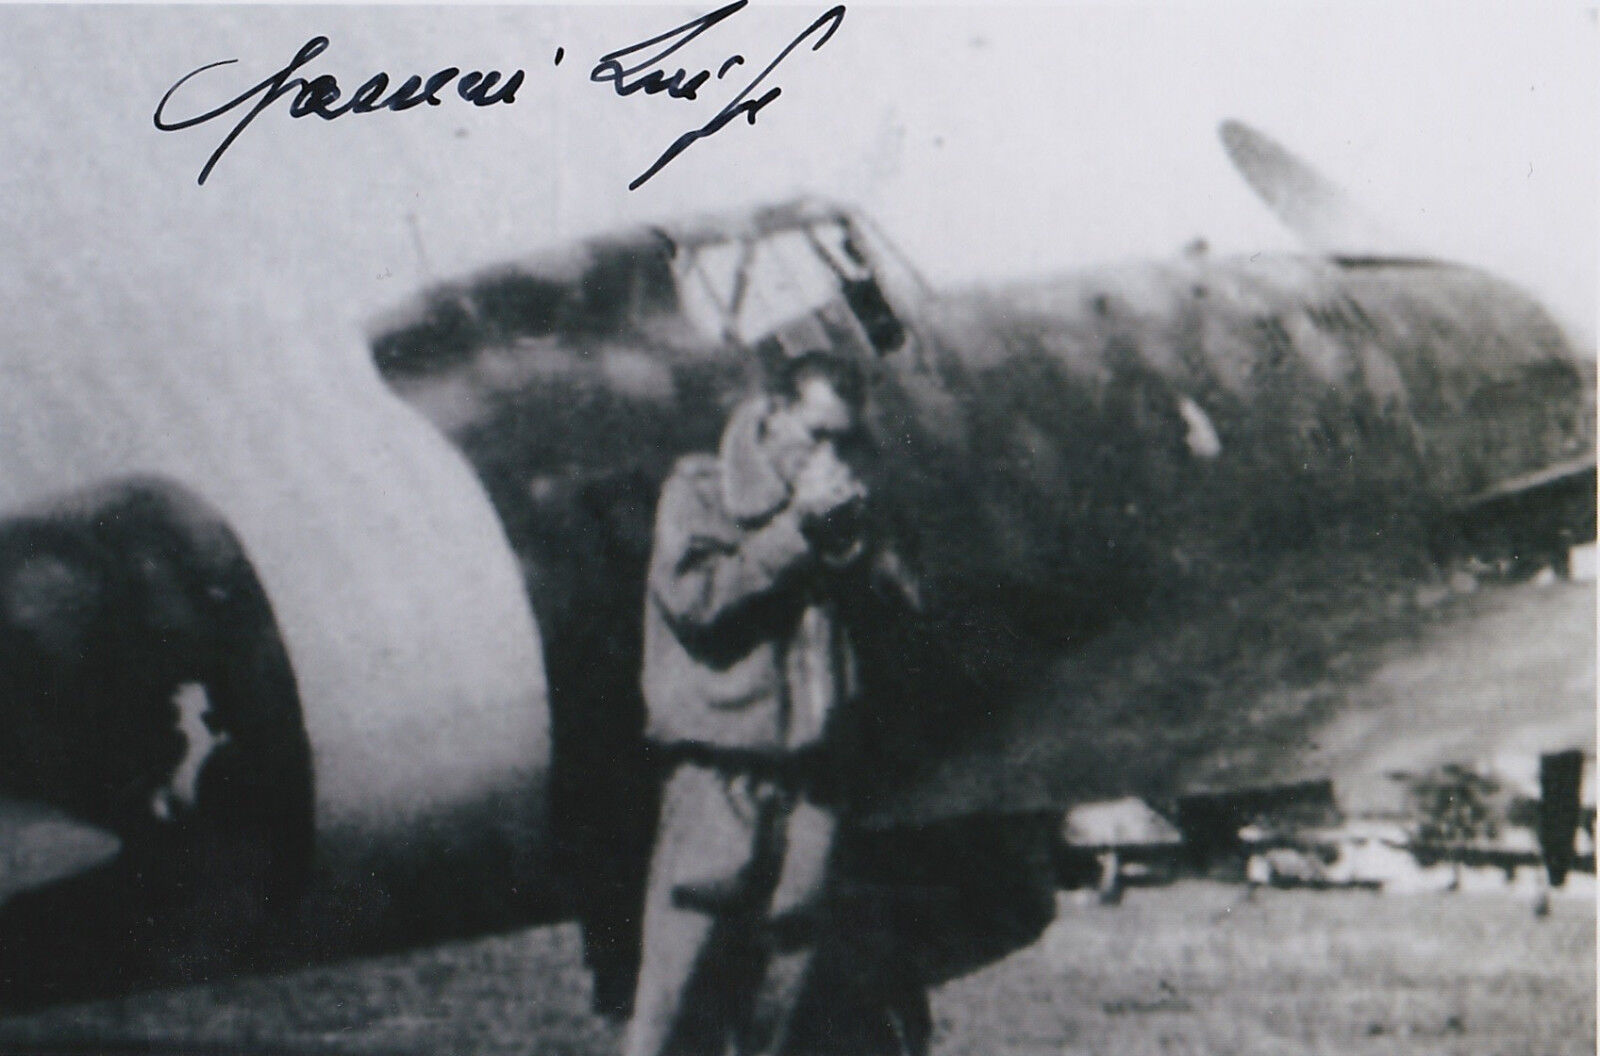 Luigi Gorrini Signed 4x6 Photo Poster painting Italian Ace WW II 19 Vic CAI Battle of Britain